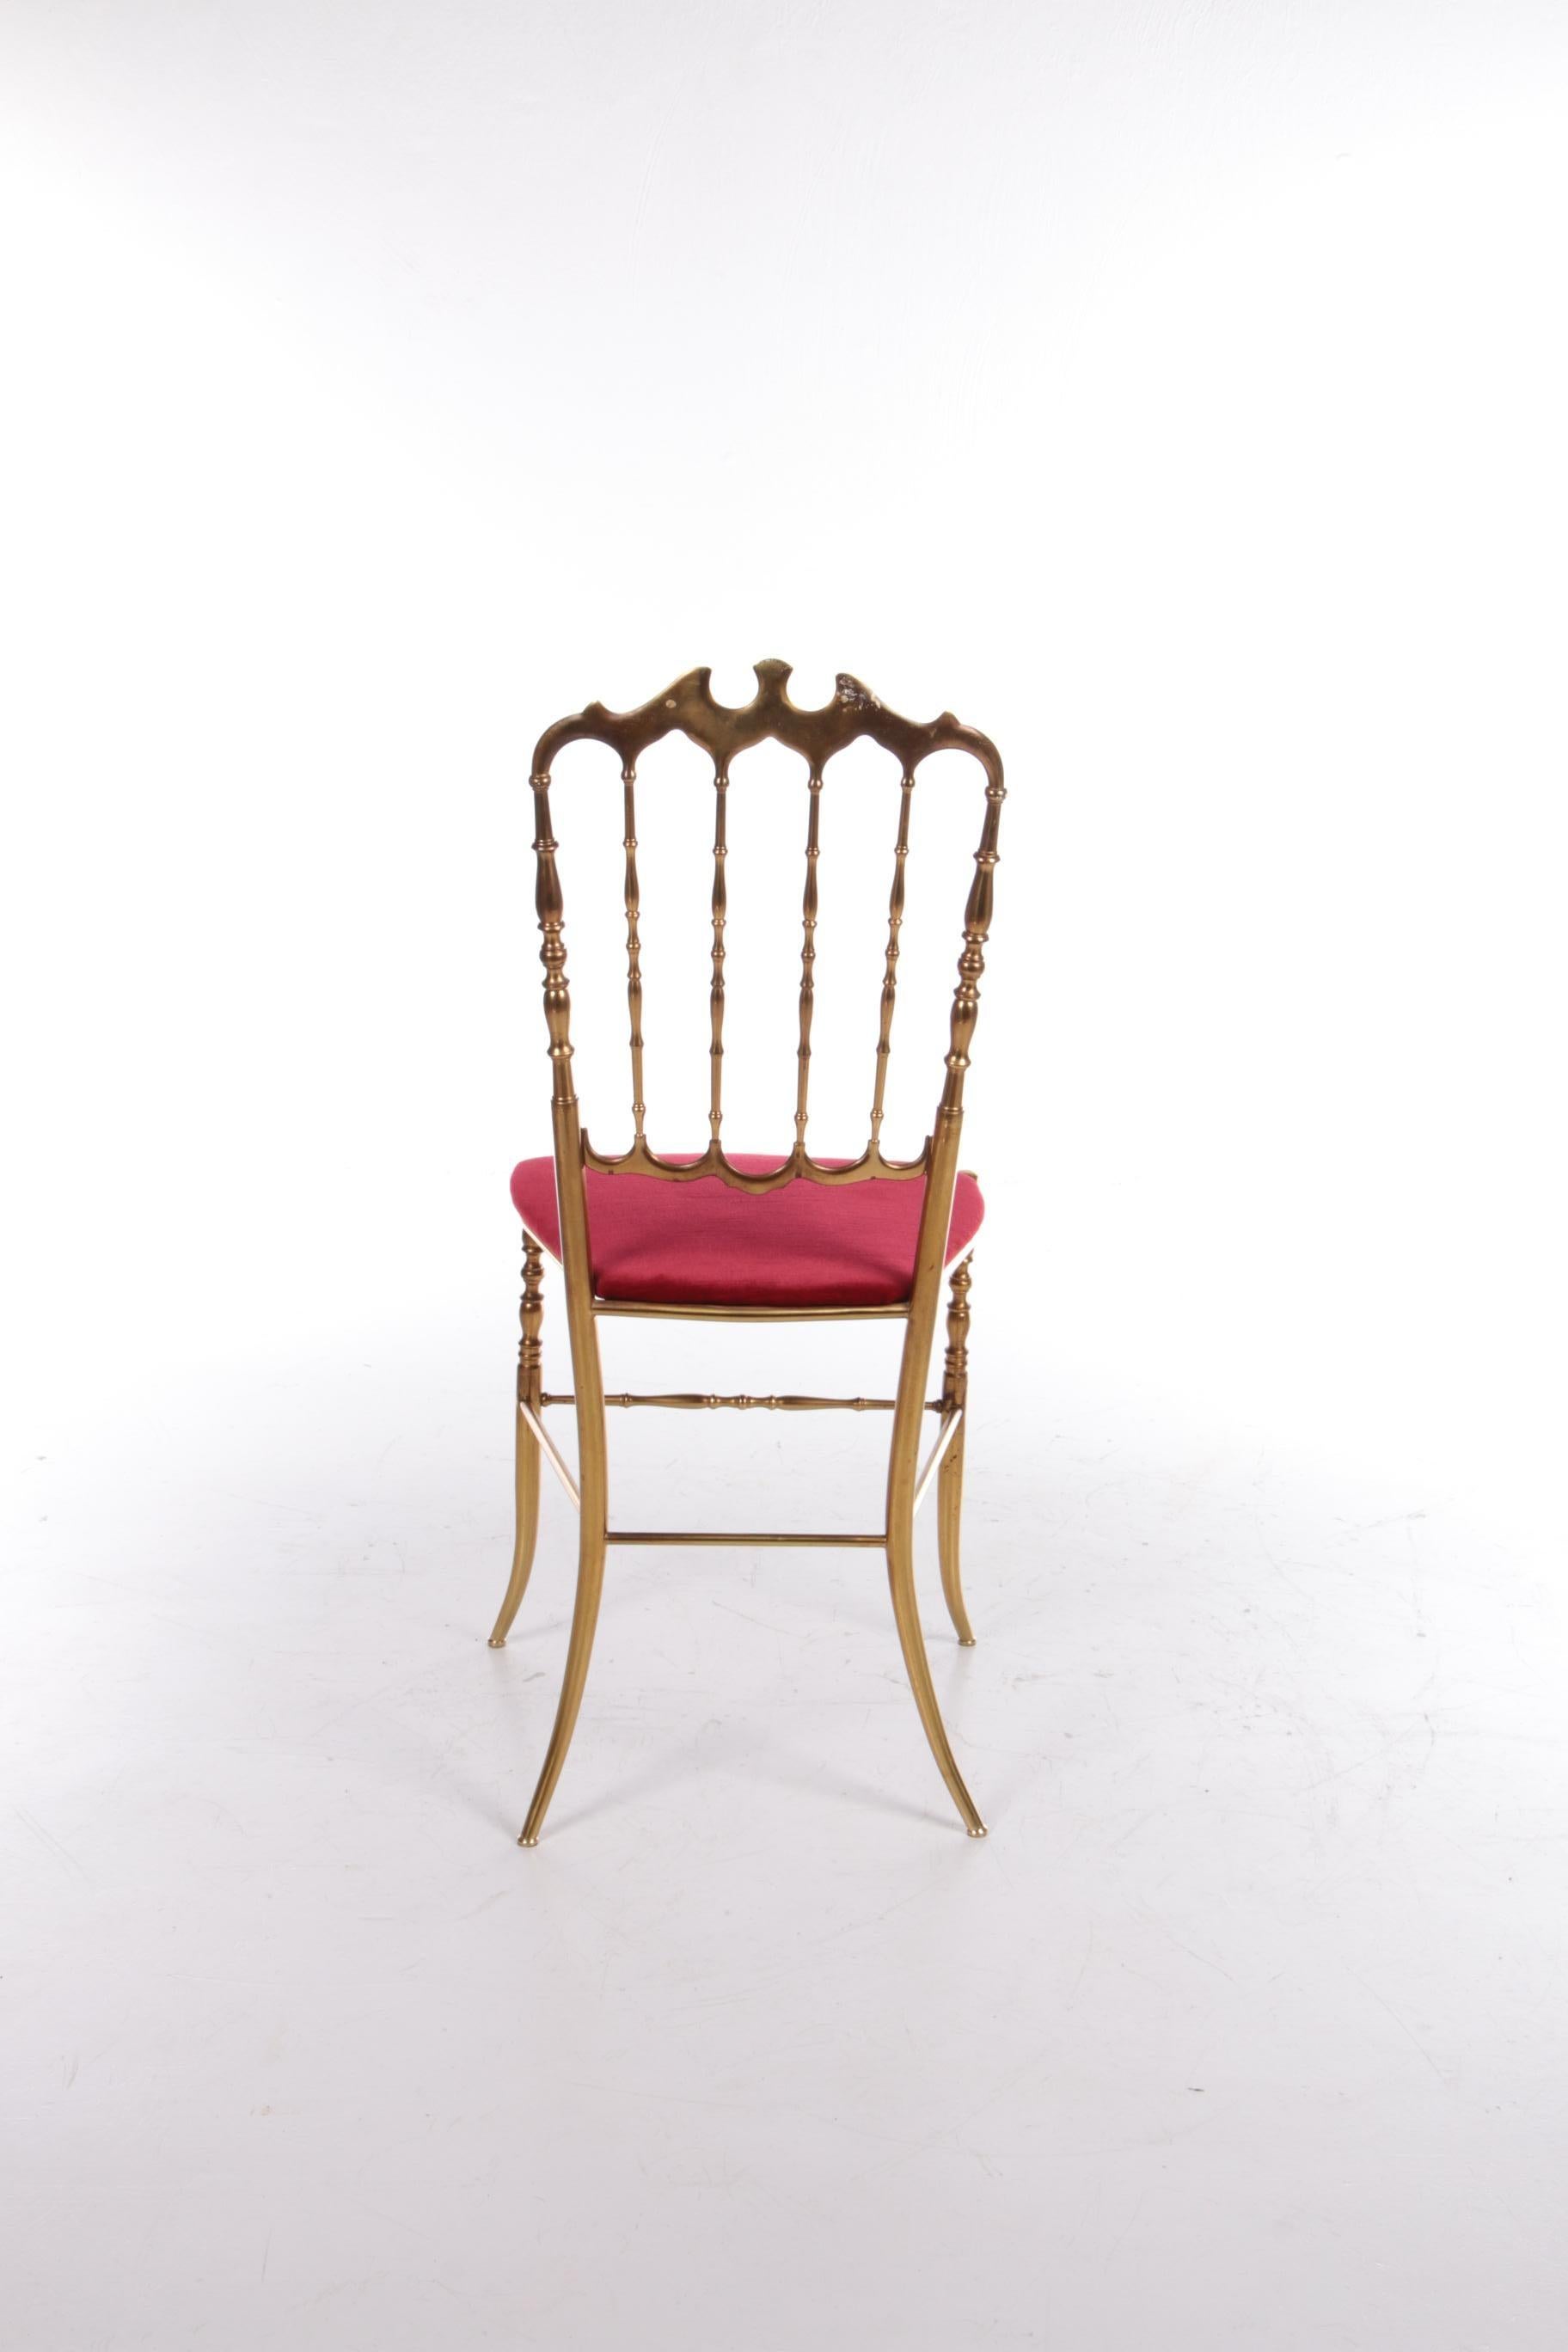 Mid-20th Century Italian Design Side Chair by Giuseppe Gaetano Descalzi for Chiavari, Italy 1950